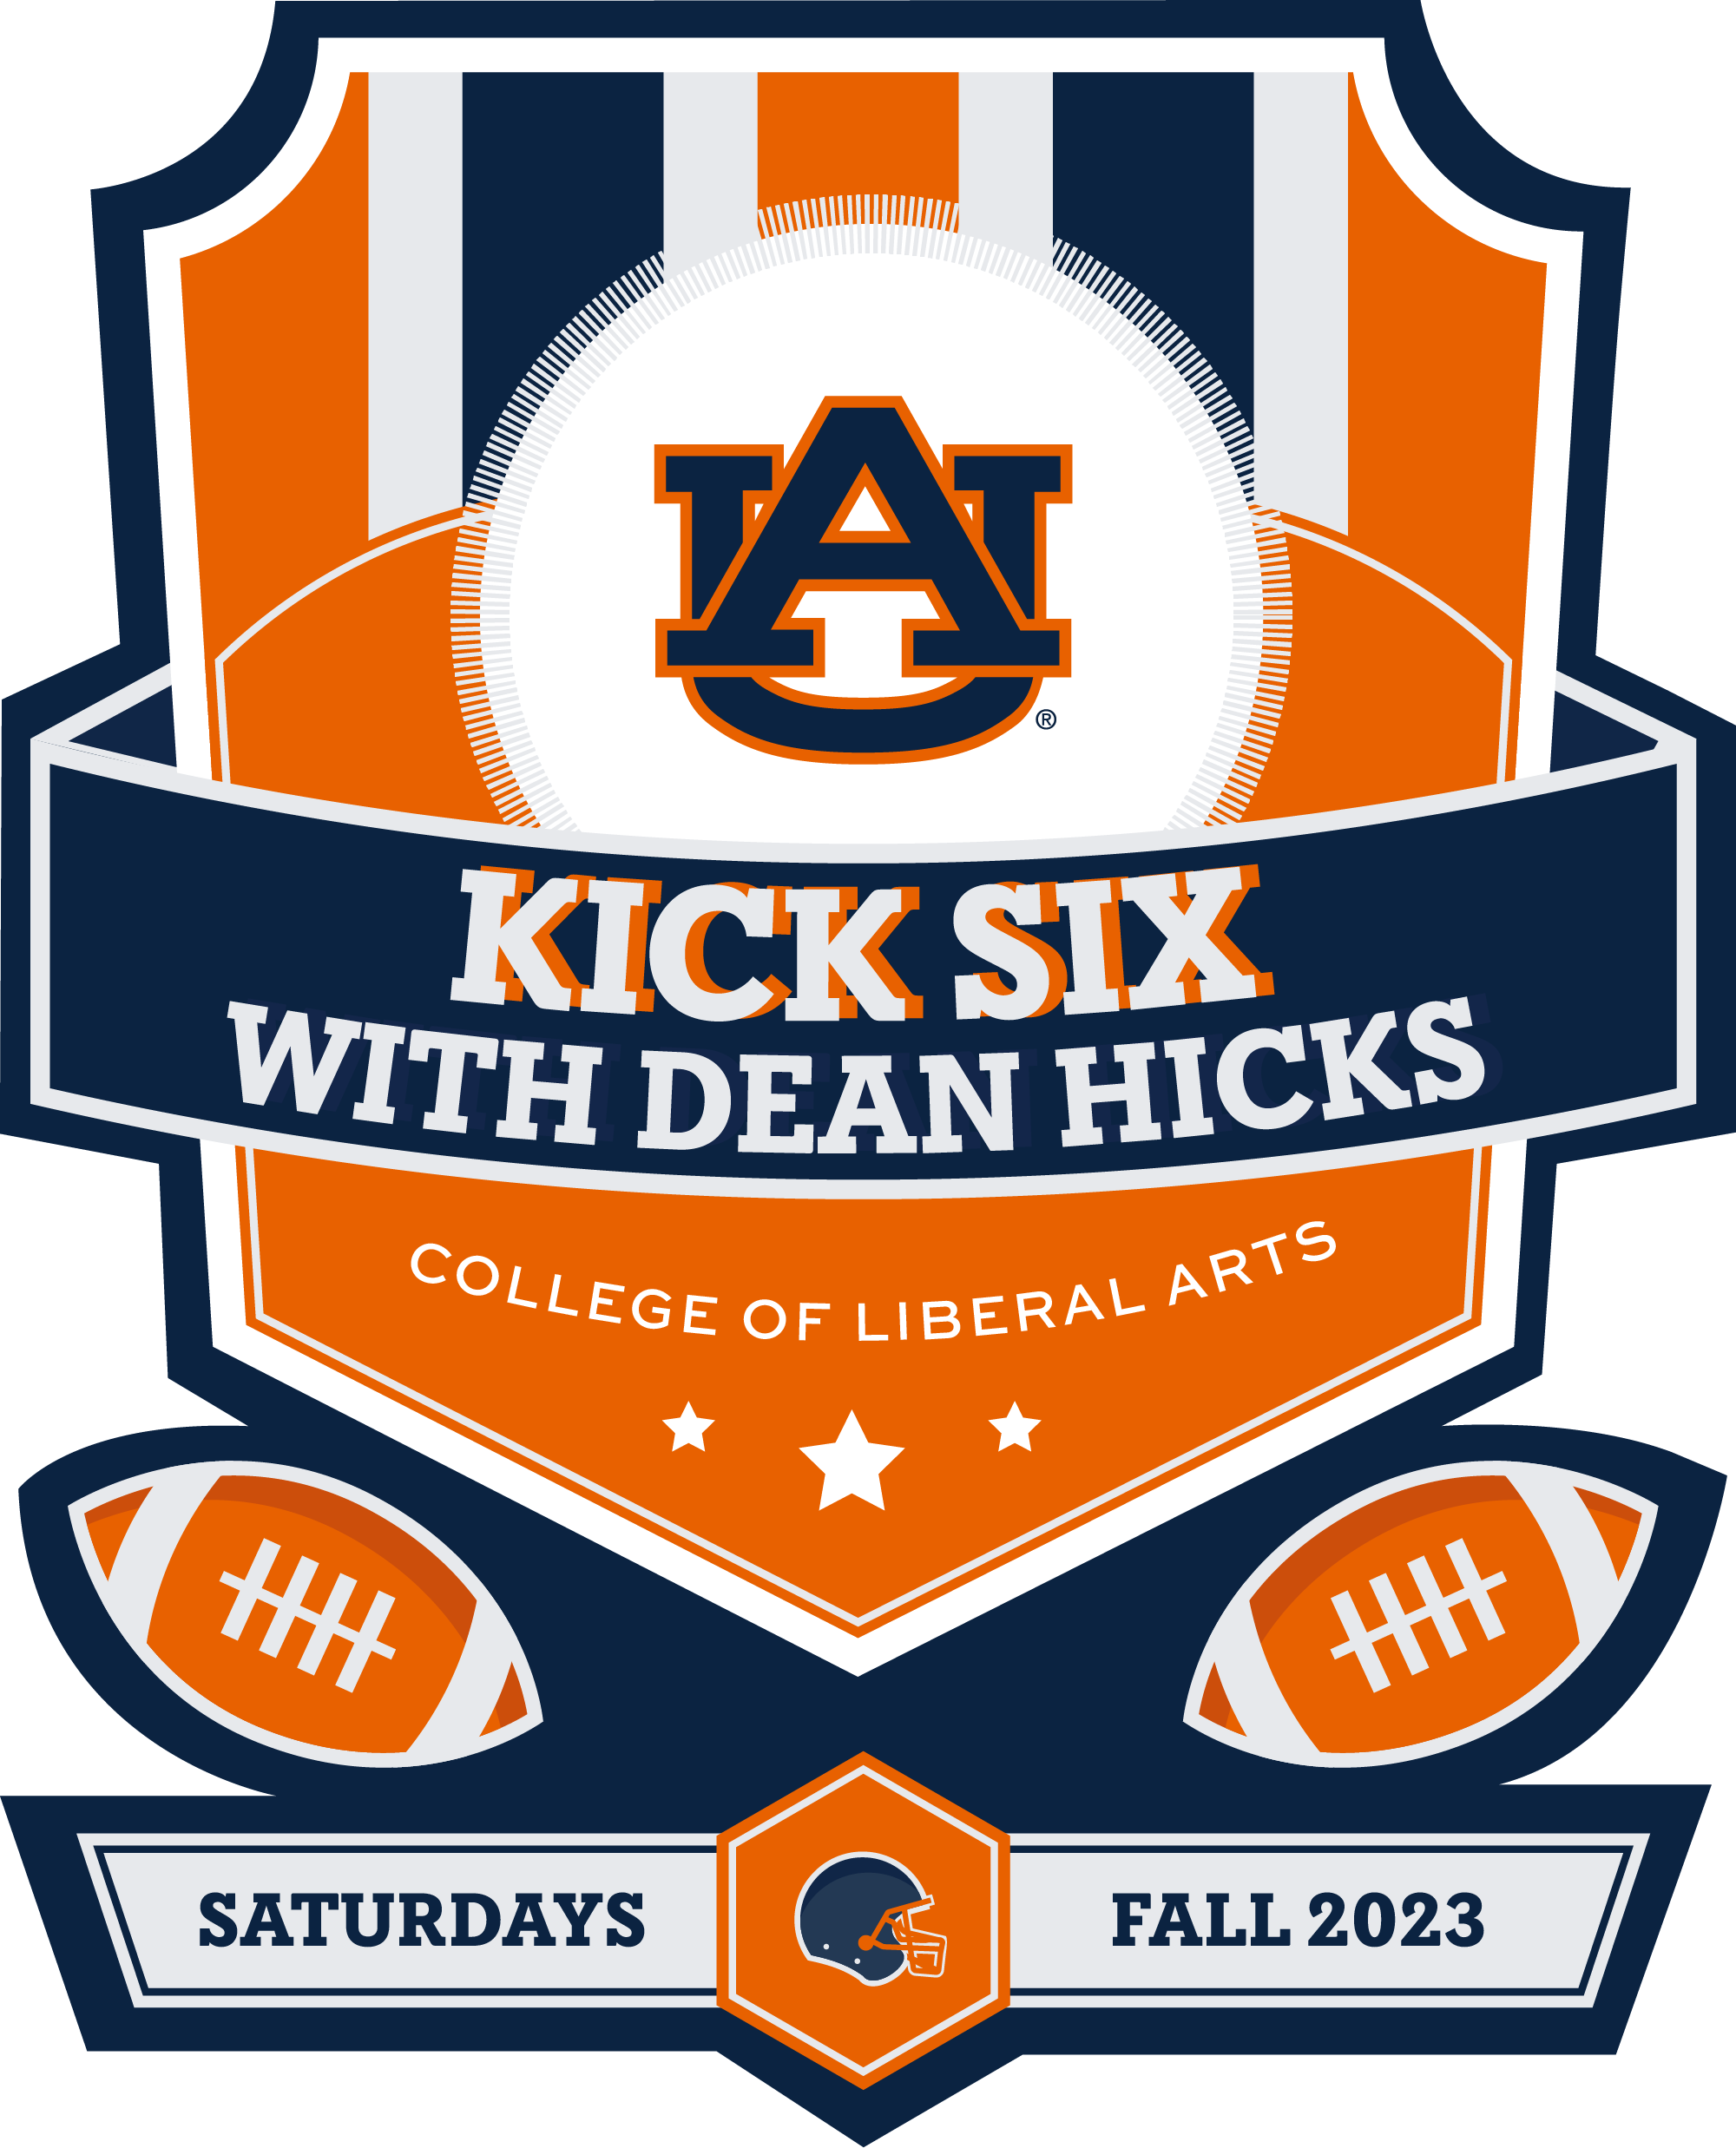 Kick six with Dean Hicks